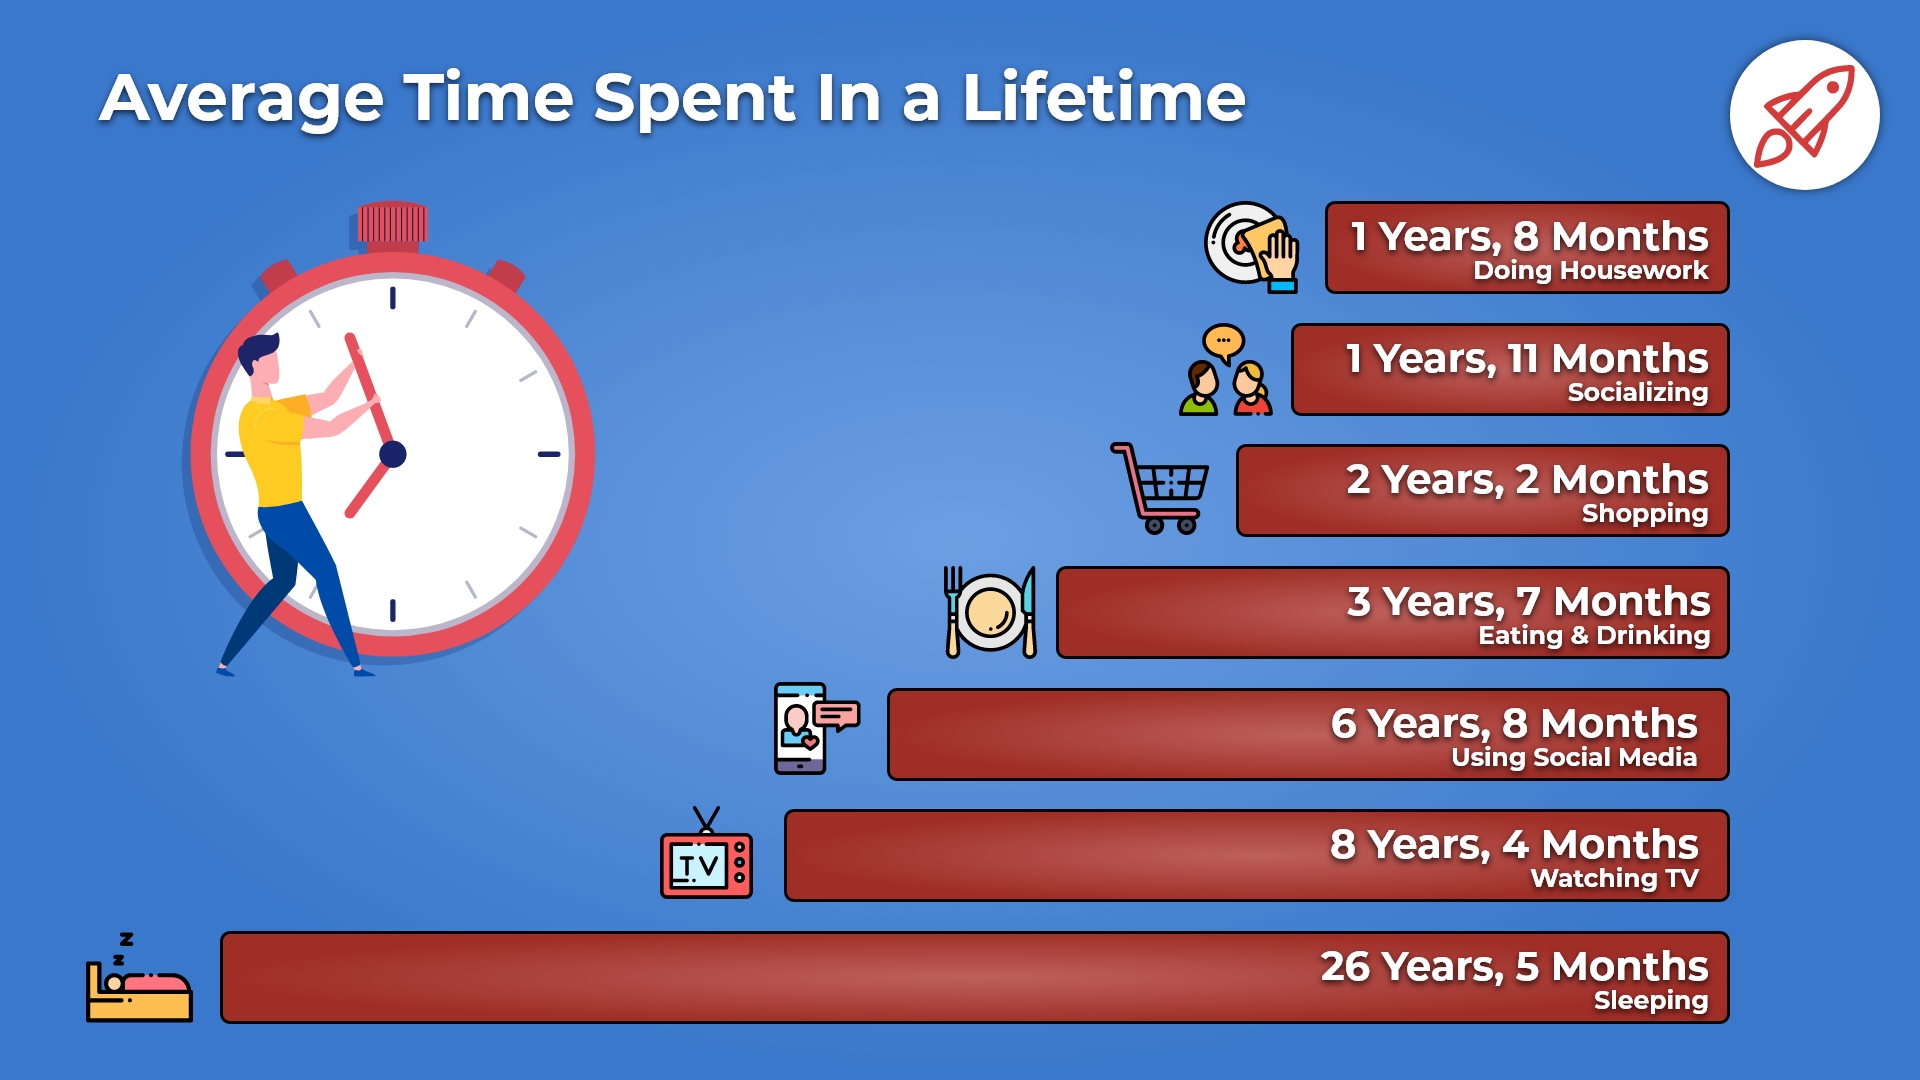 Average Time Spent On Tasks In A Lifetime